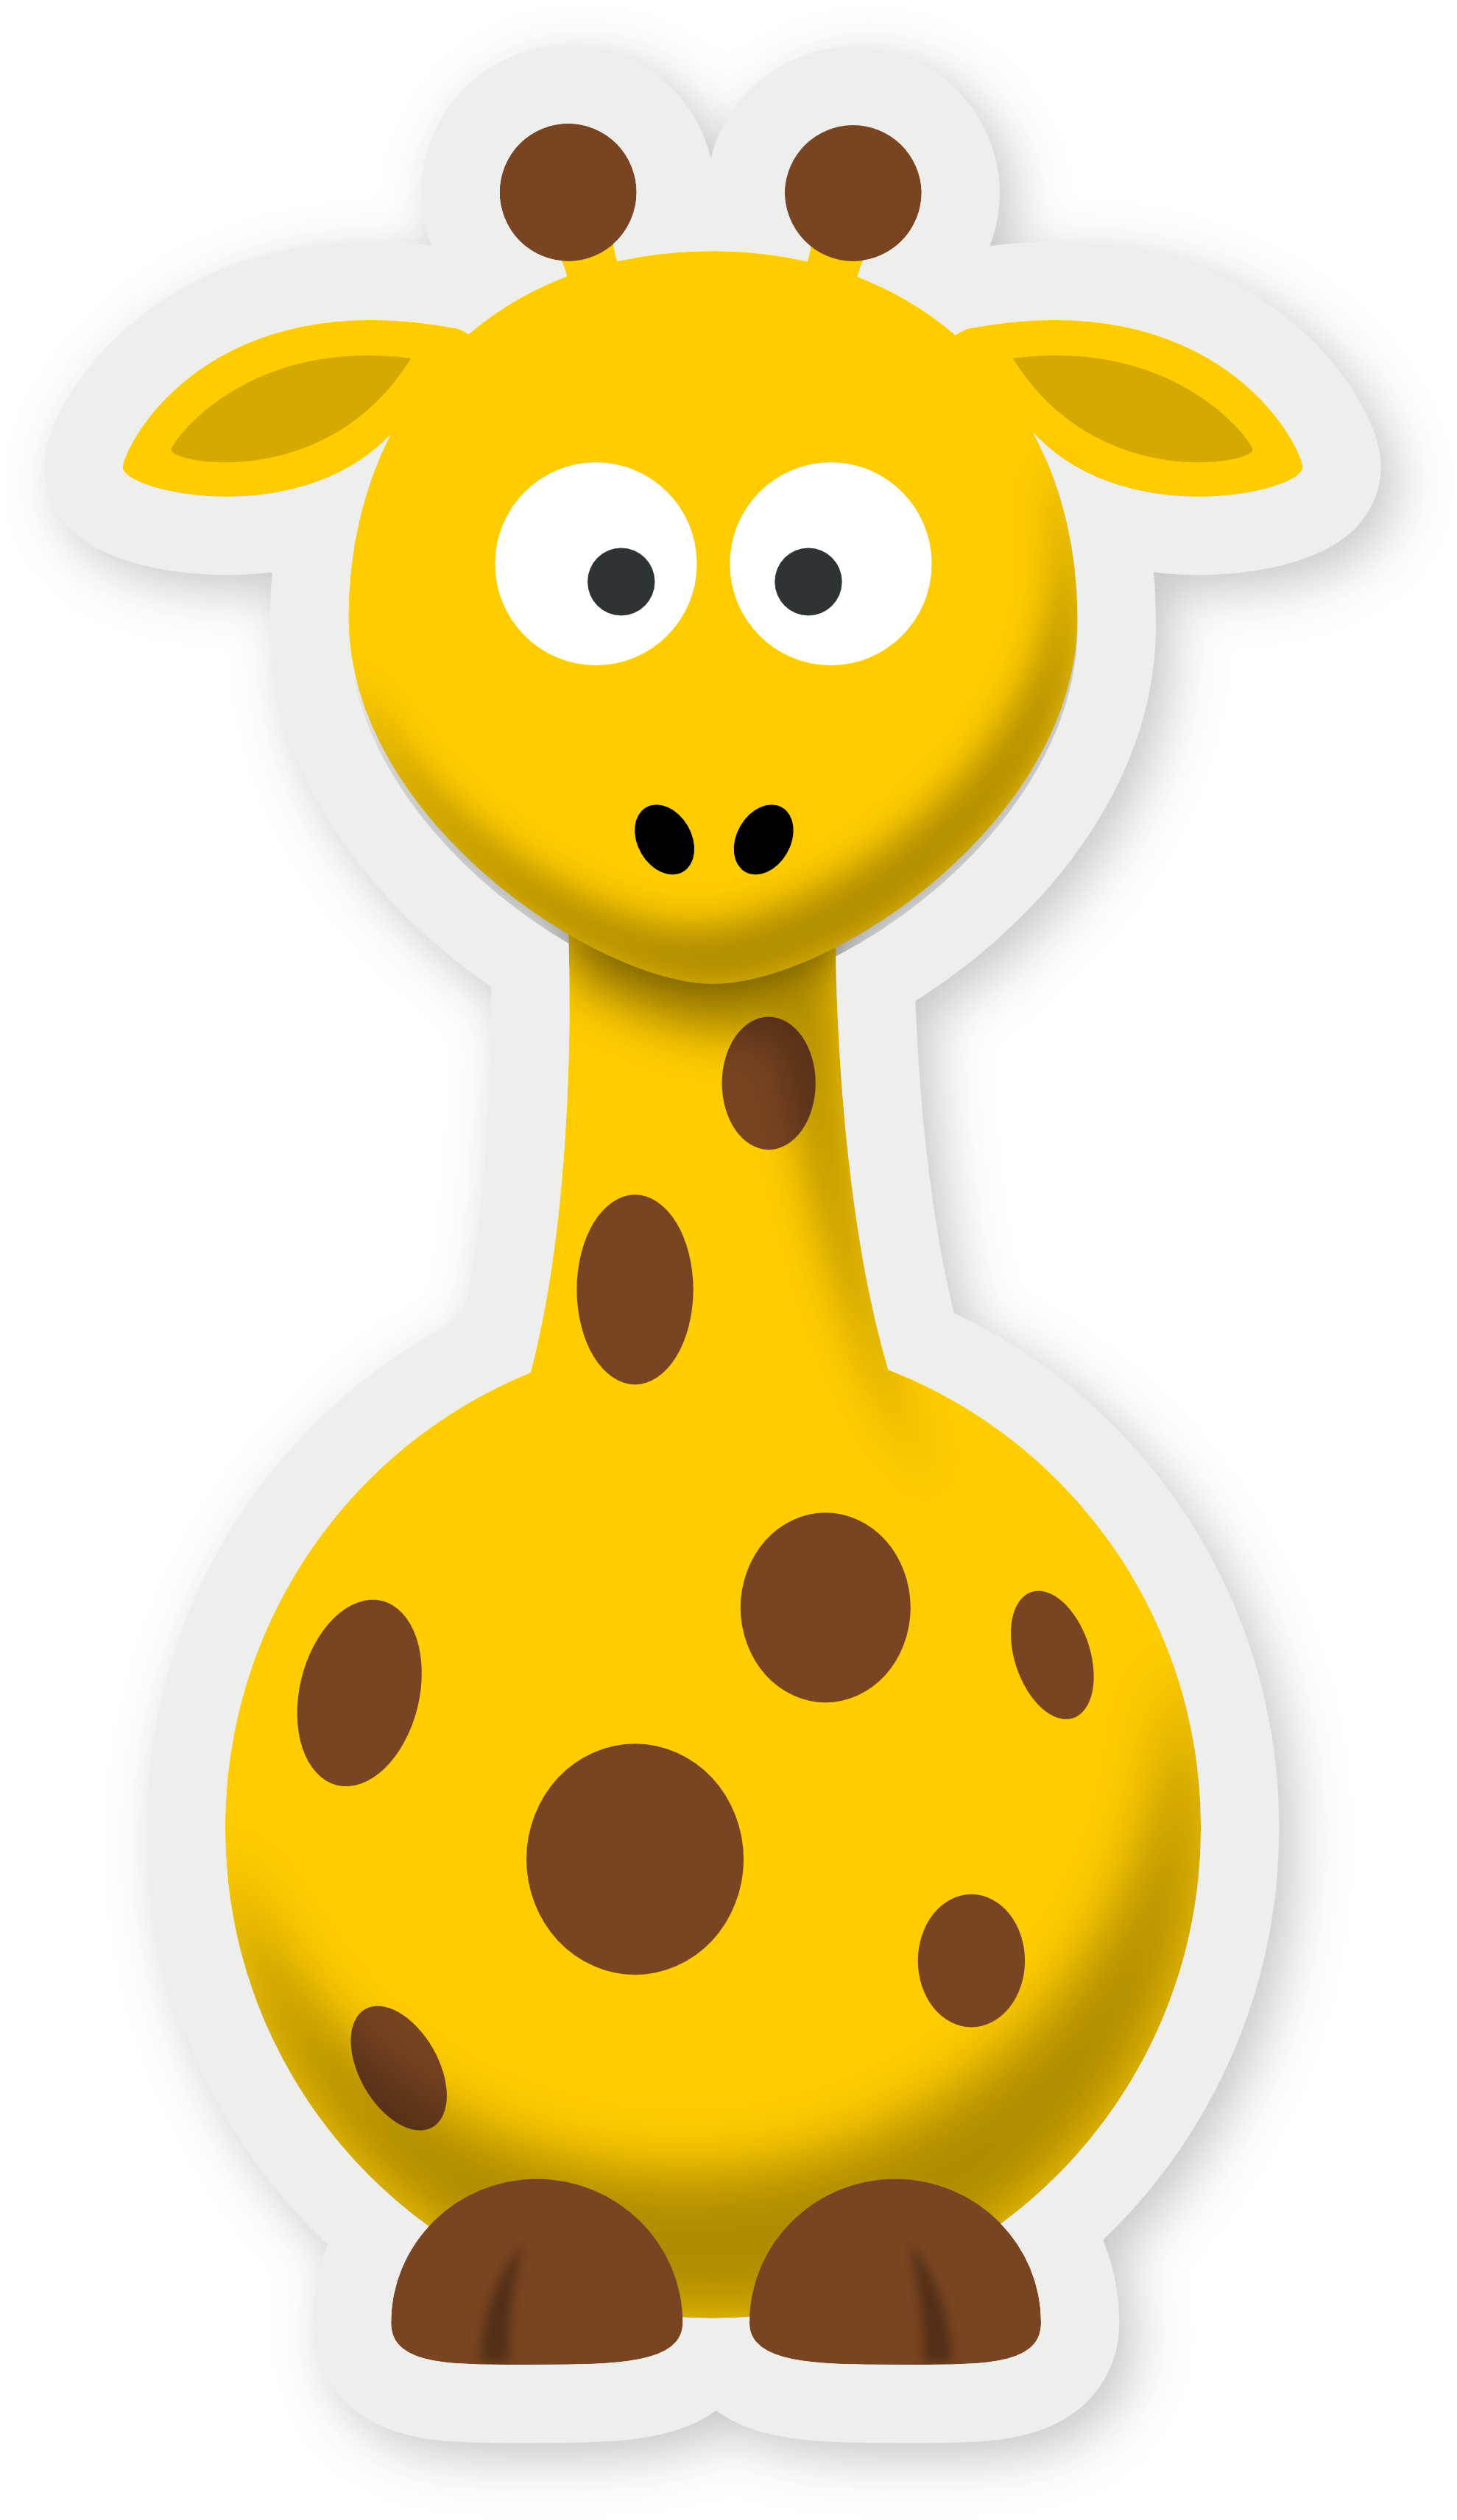 Clip Art: new Cartoon Giraffe September 2011 ...